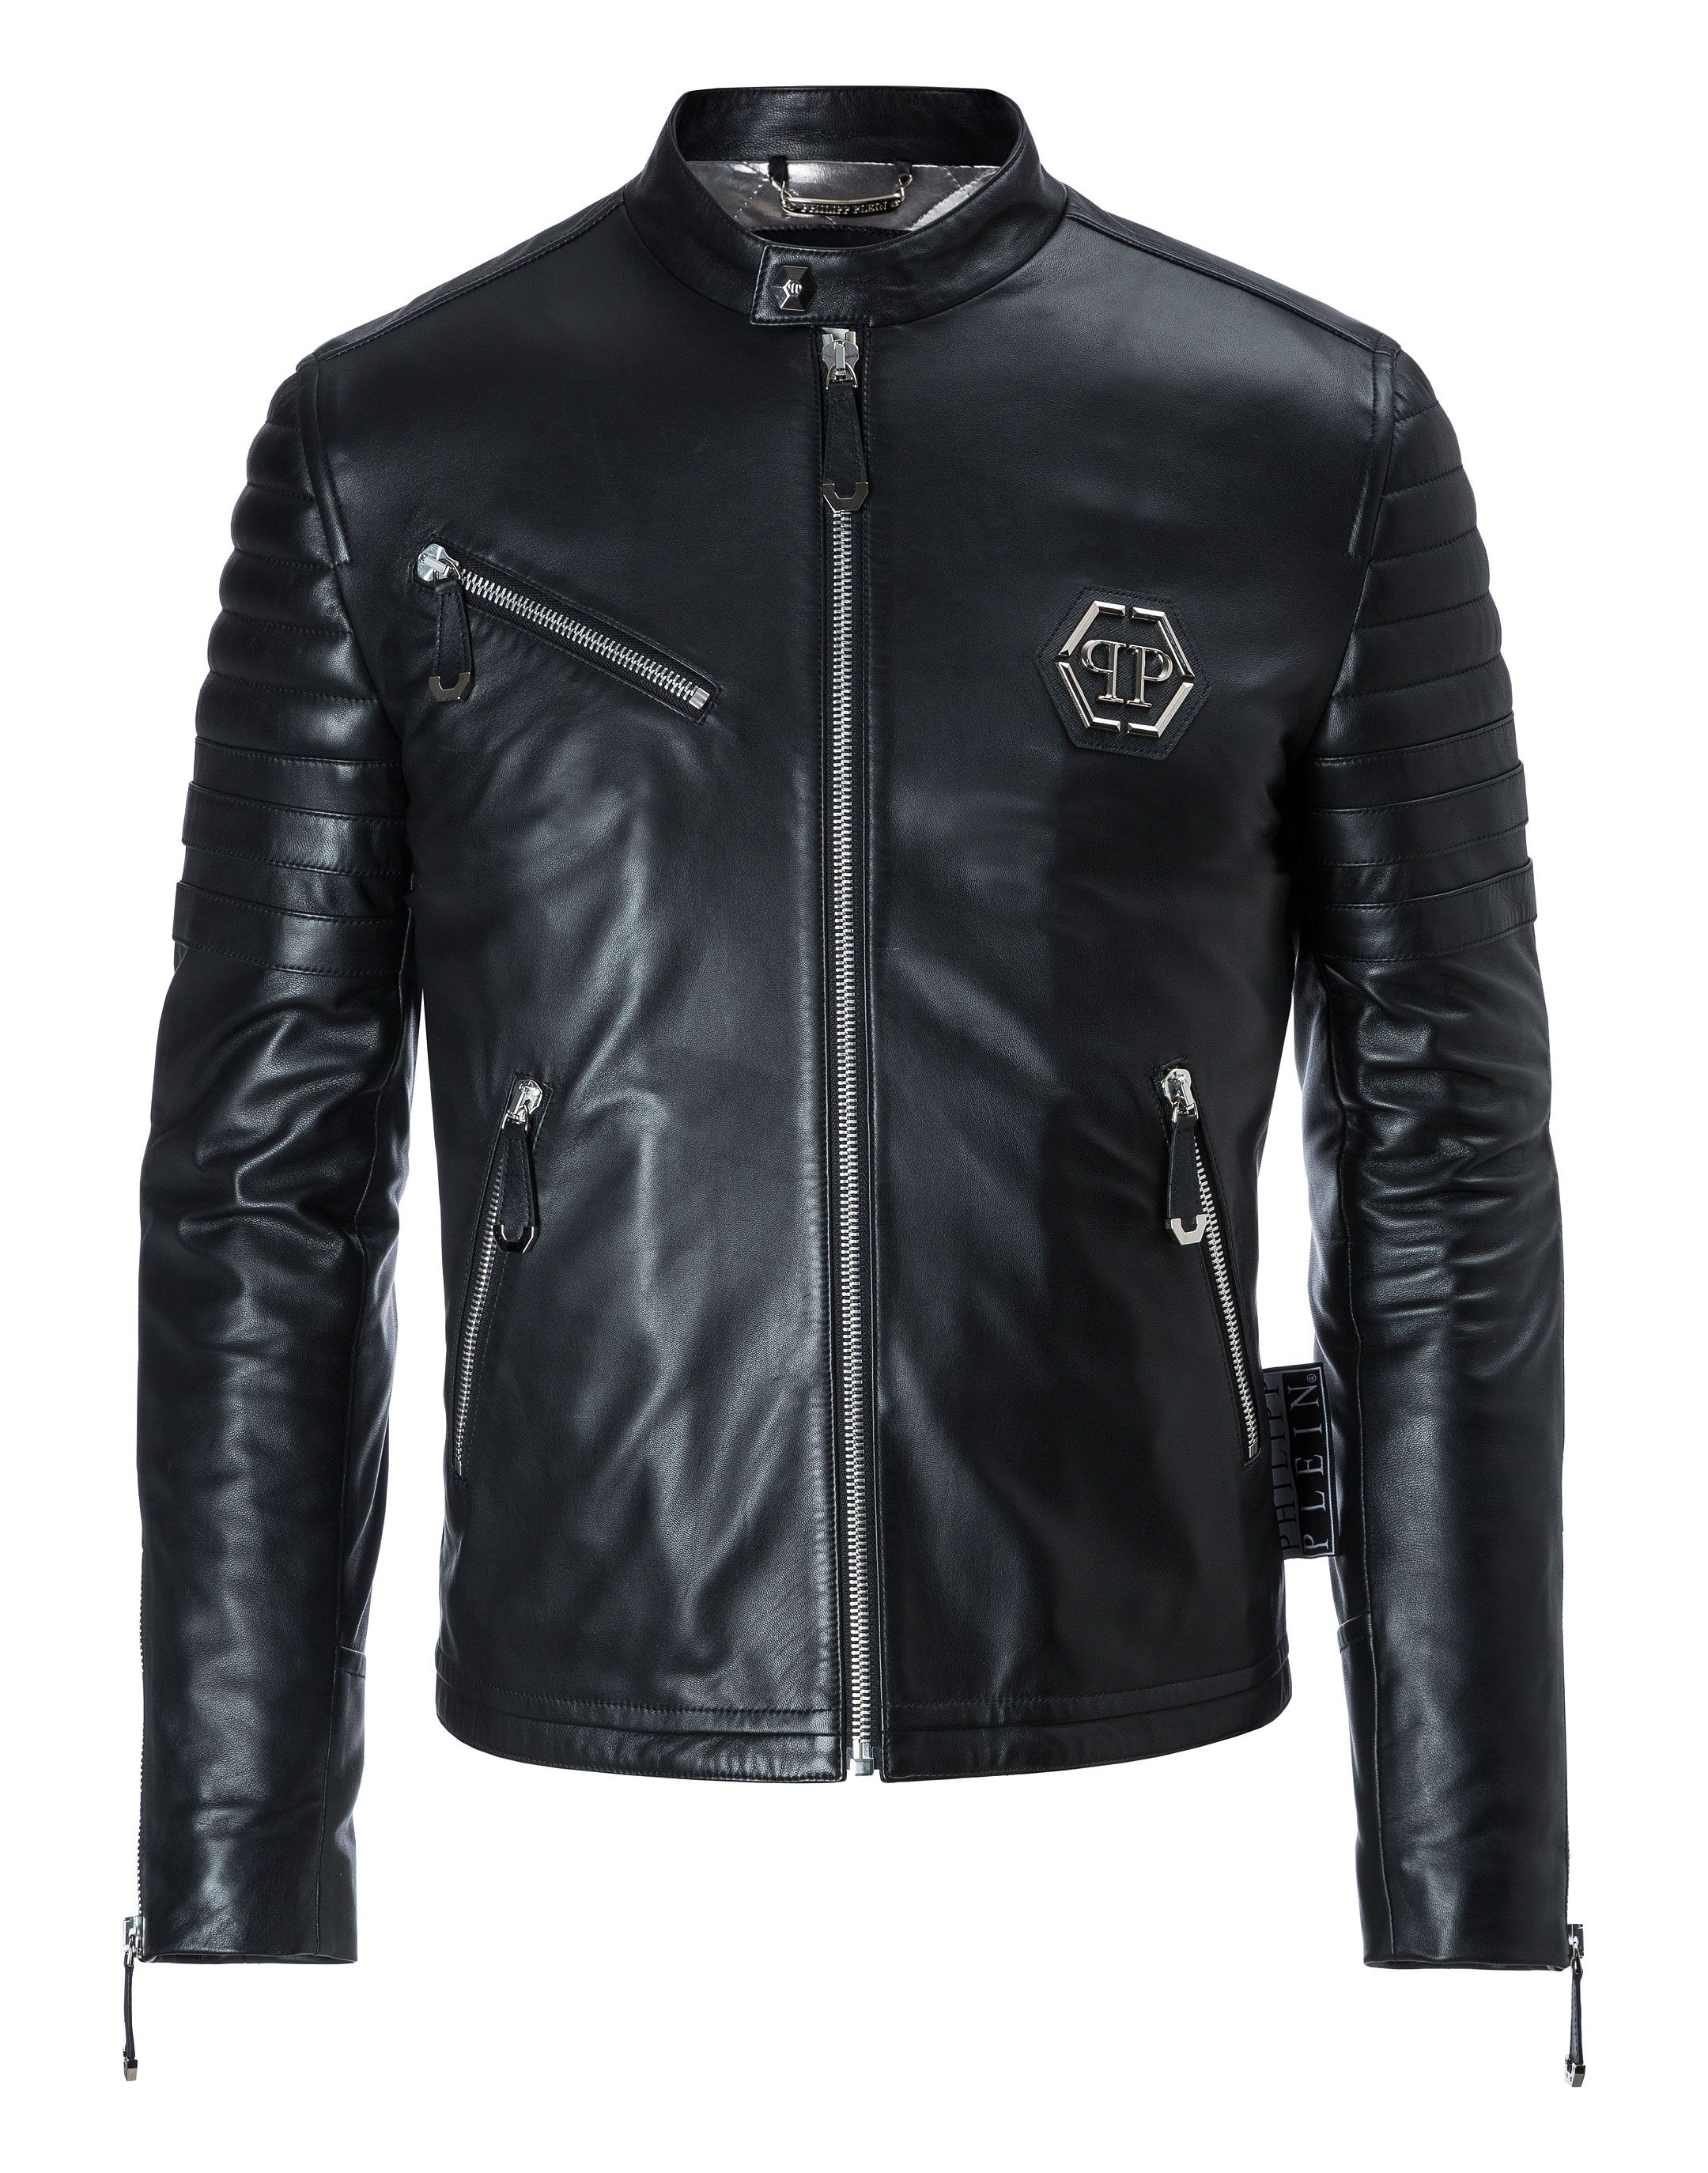 philipp plein jacket leather